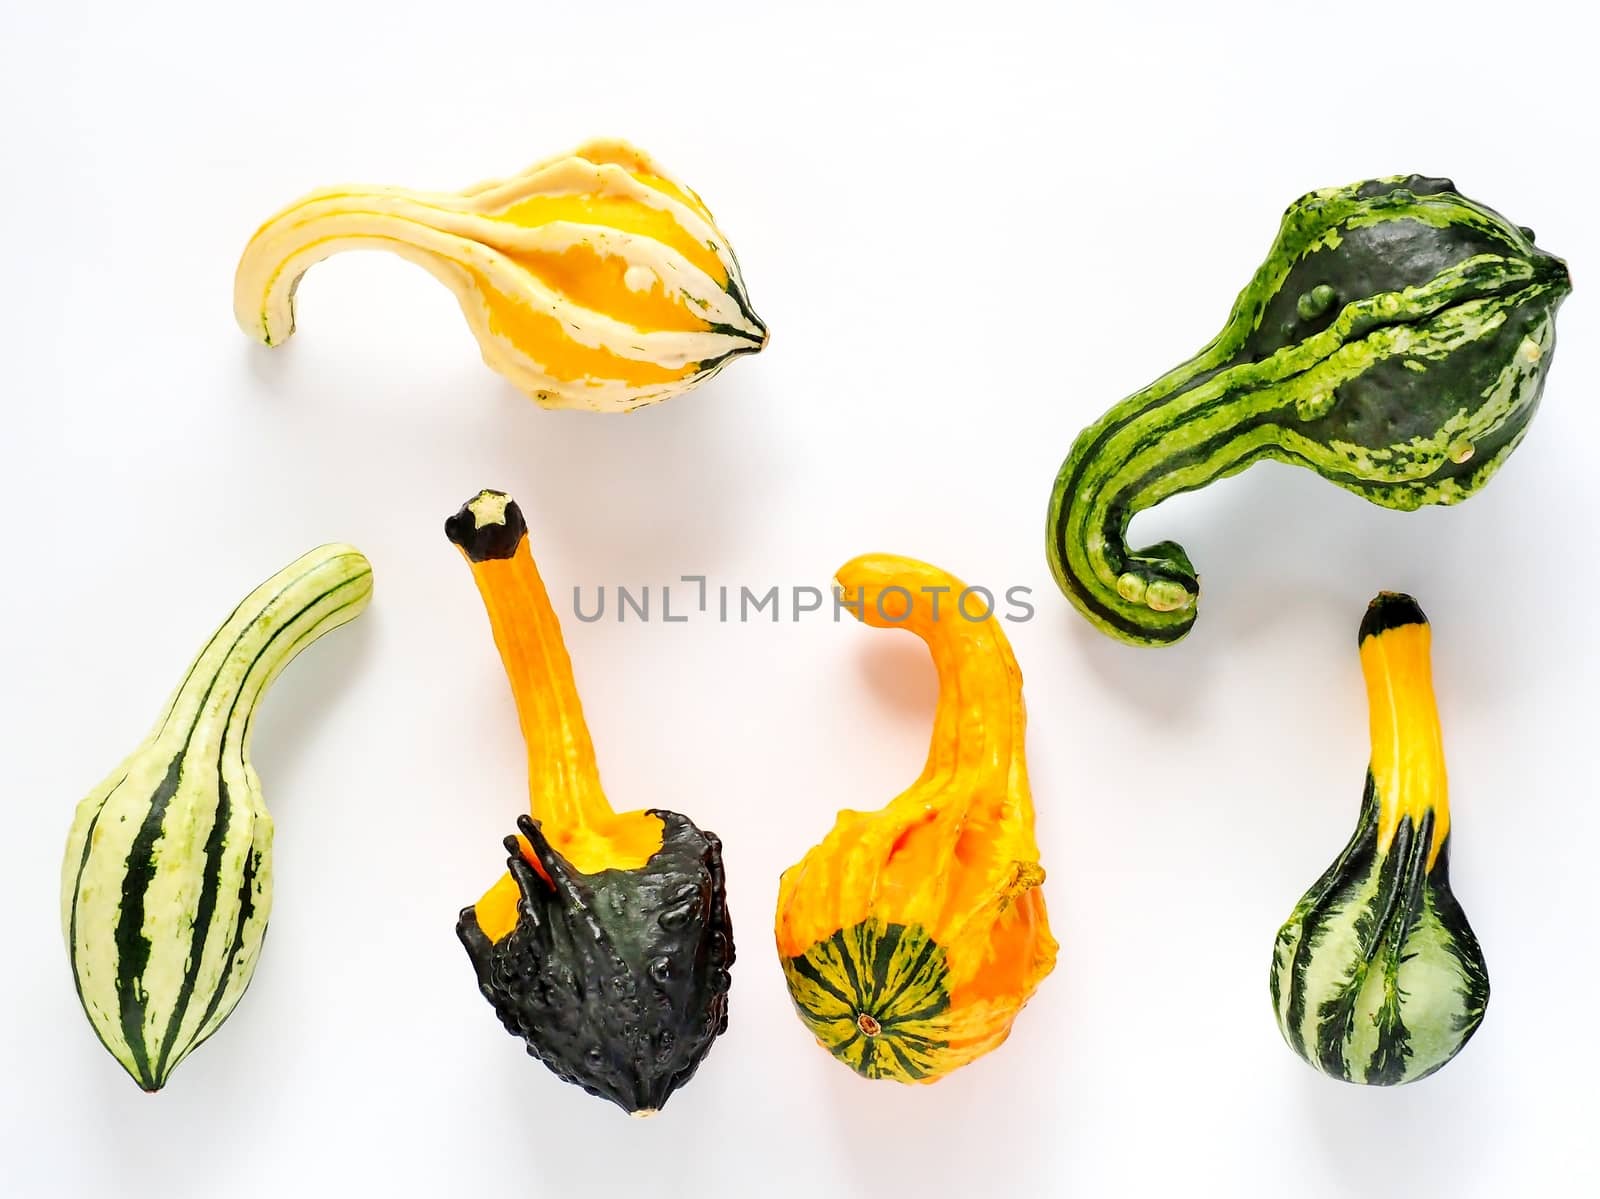 Decorative pumpkins by Monatica